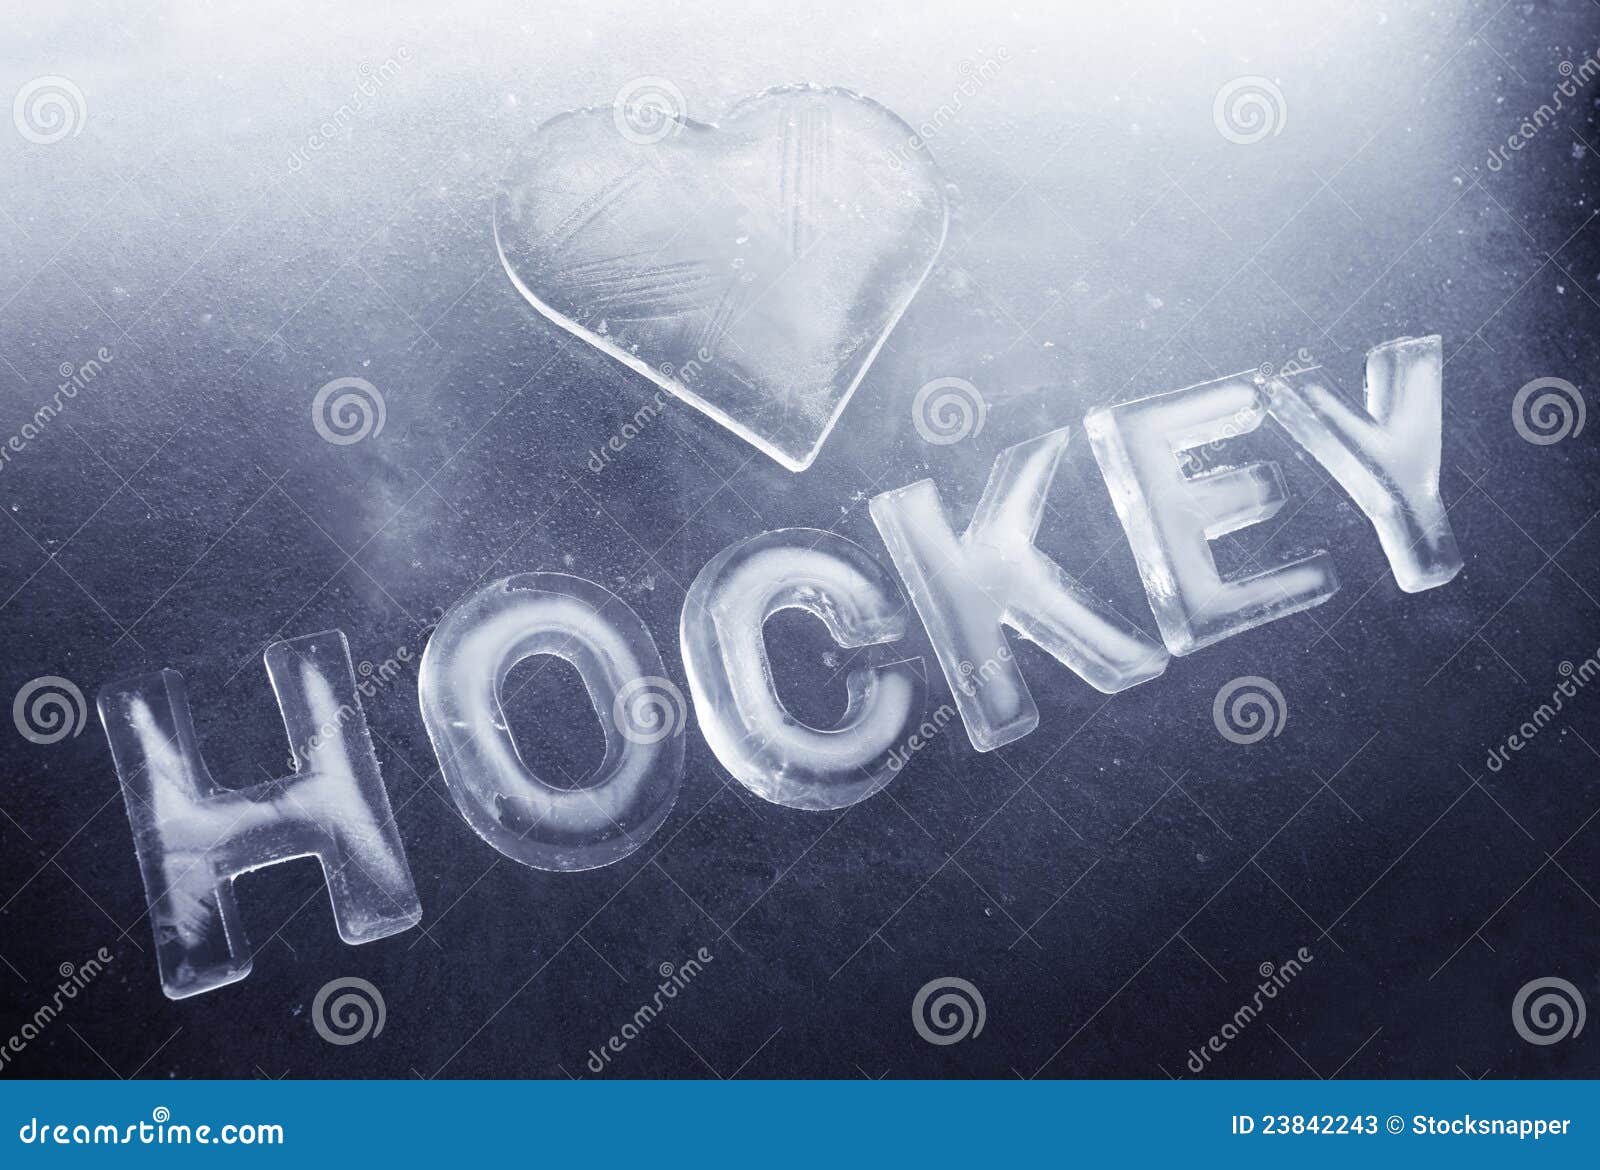 Winkelcentrum samenkomen Afstudeeralbum I Love Hockey stock image. Image of passionate, object - 23842243